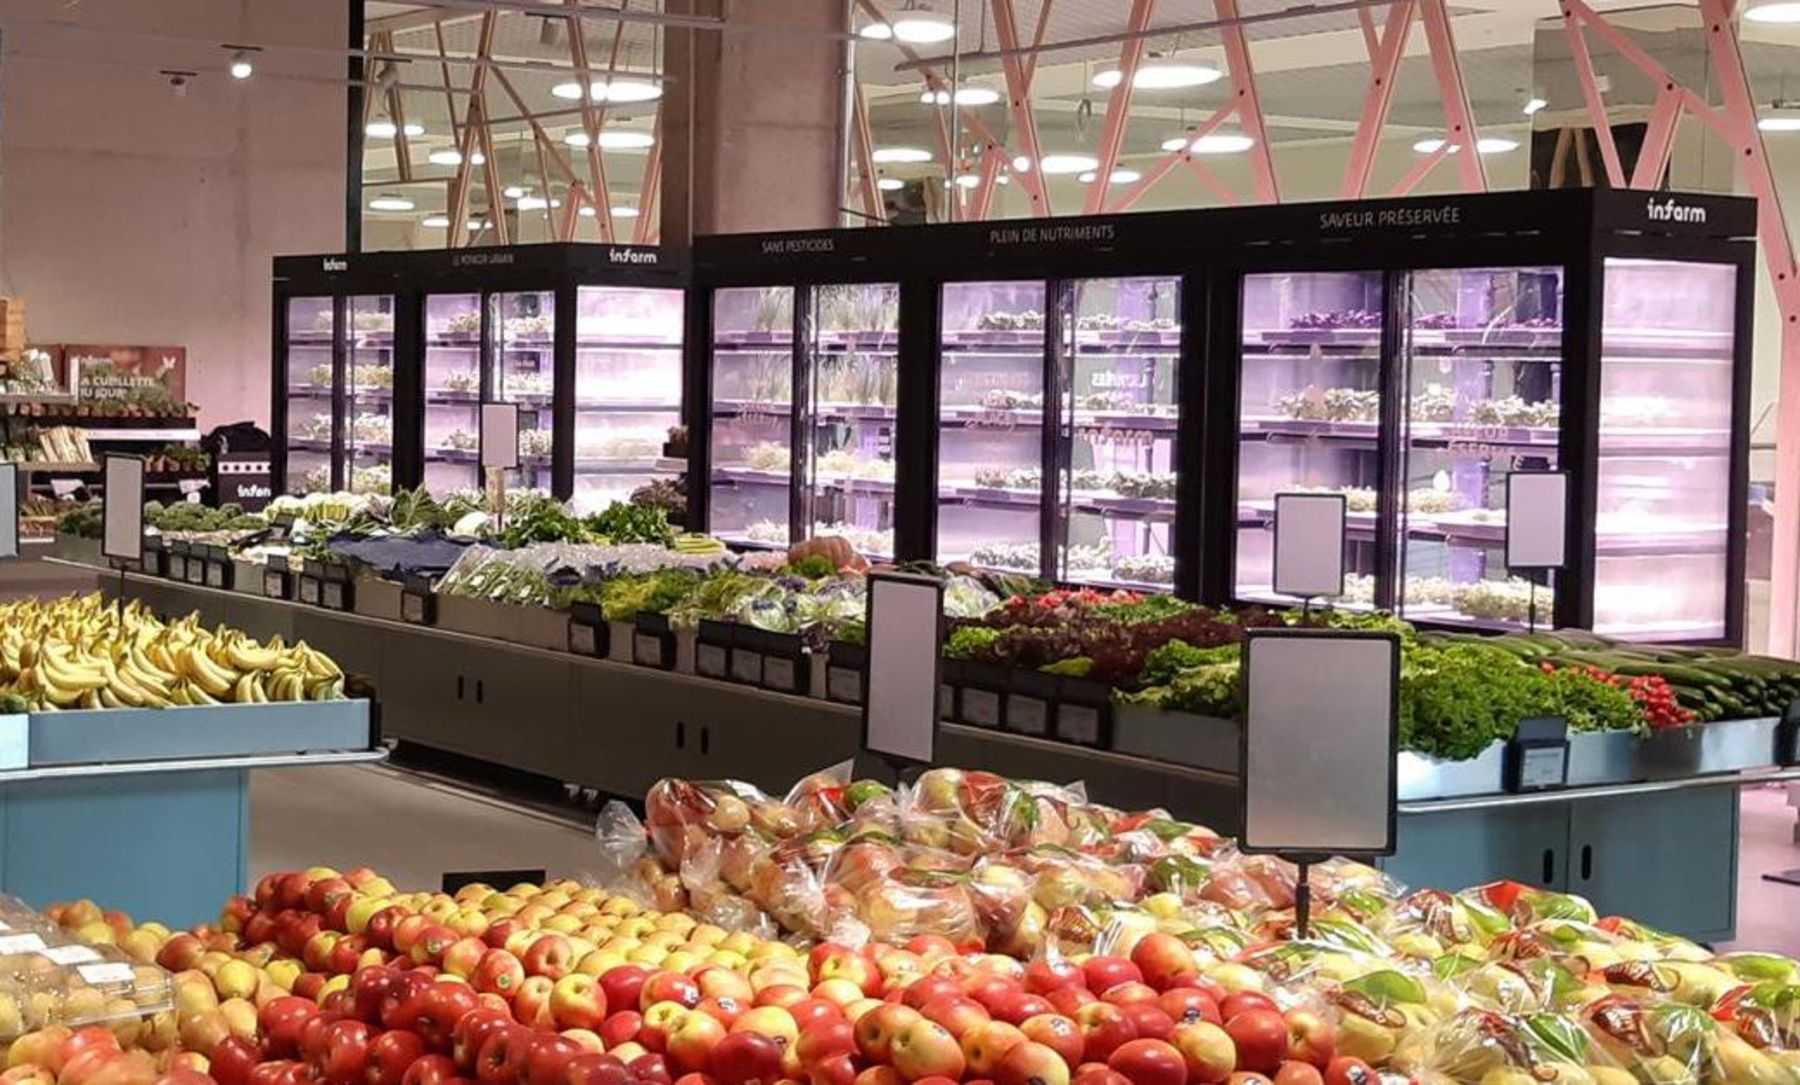 Indoor vertical farm cabinets sit alongside retail food displays.